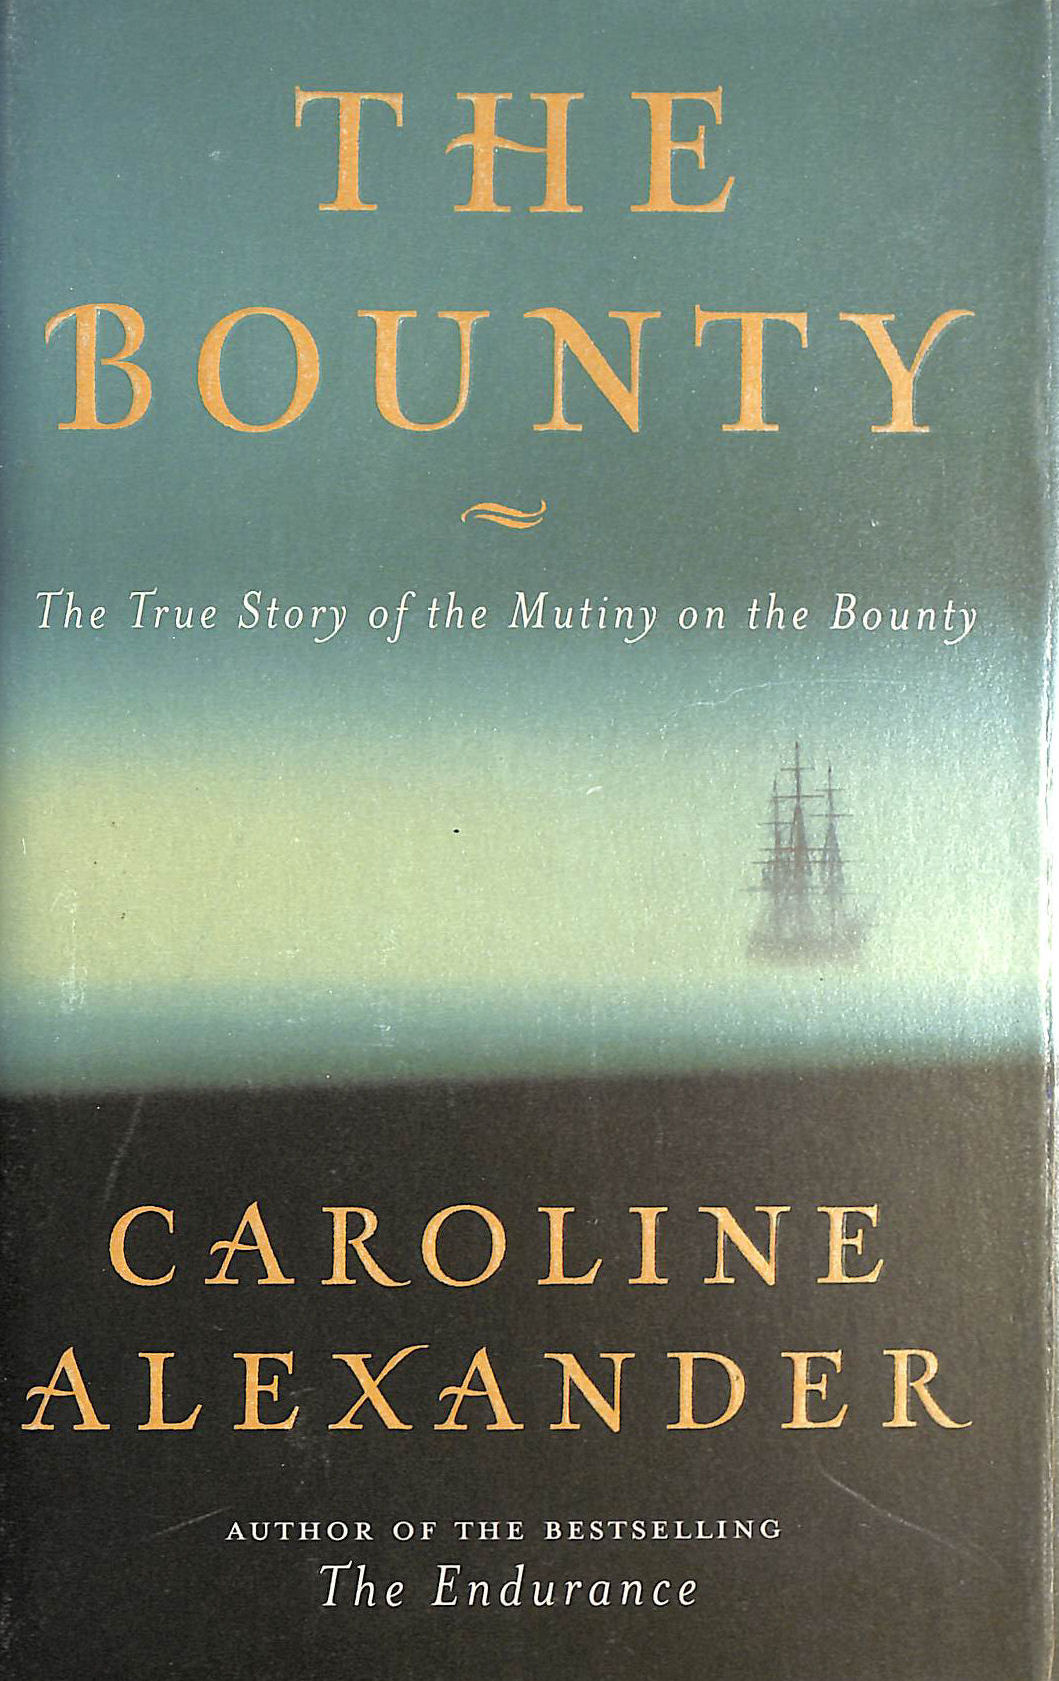 ALEXANDER, CAROLINE - The Bounty: The True Story of the Mutiny on the Bounty